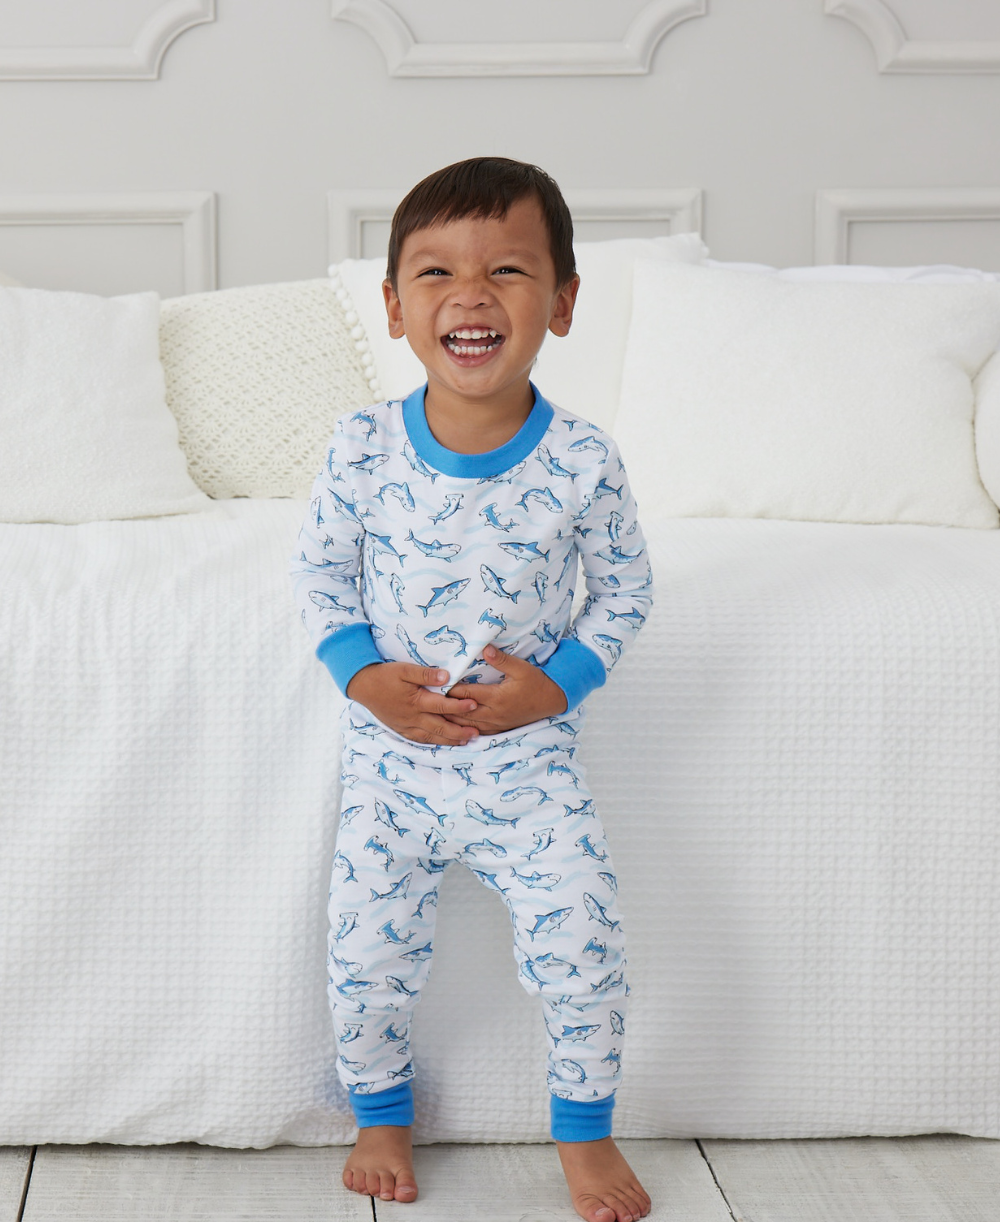 Swift Sharks Toddler Pajama Set - Kissy Kissy